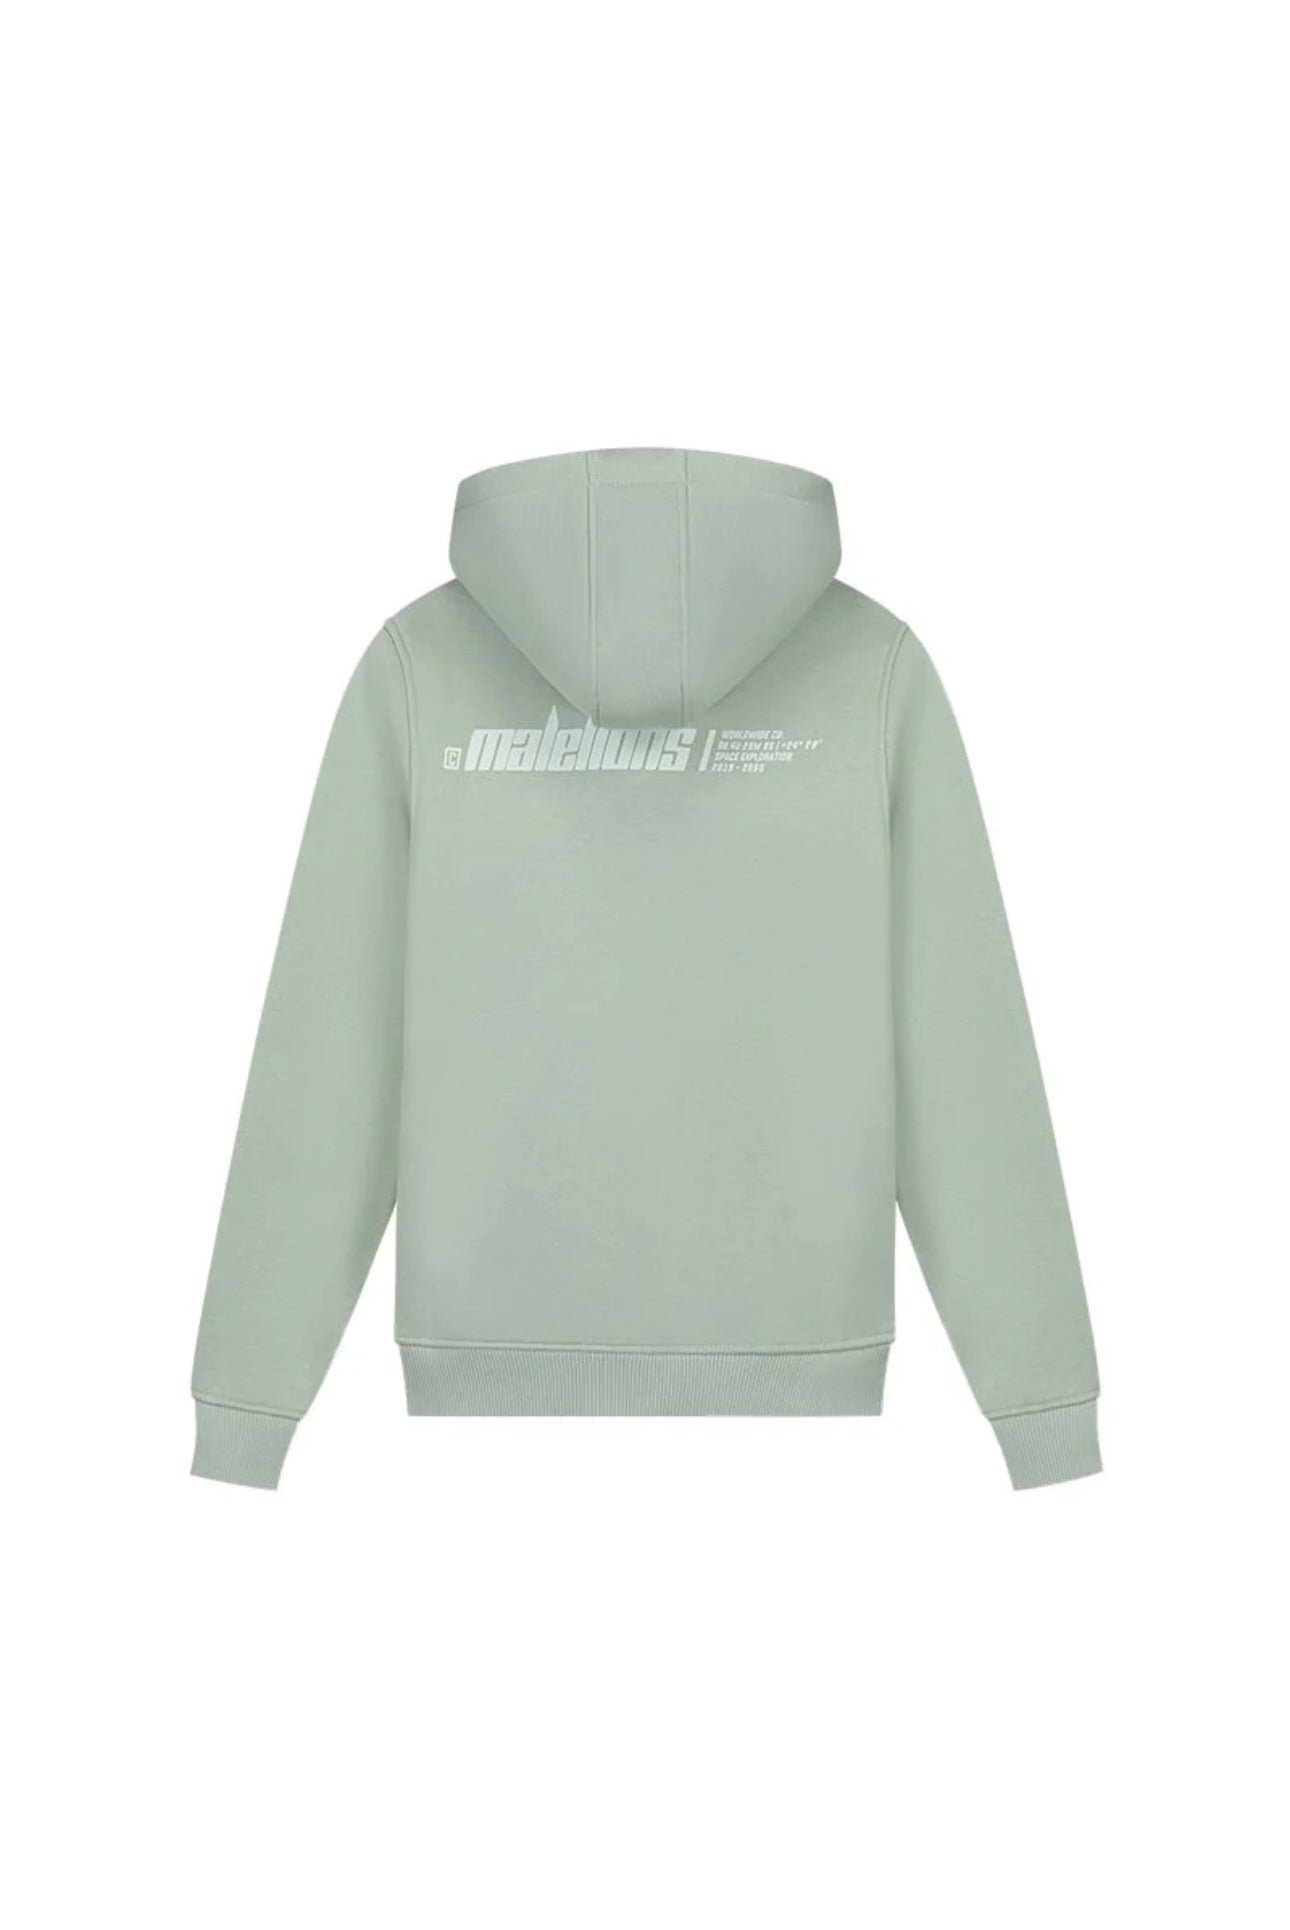 Malelions junior worldwide hoodie - aqua grey